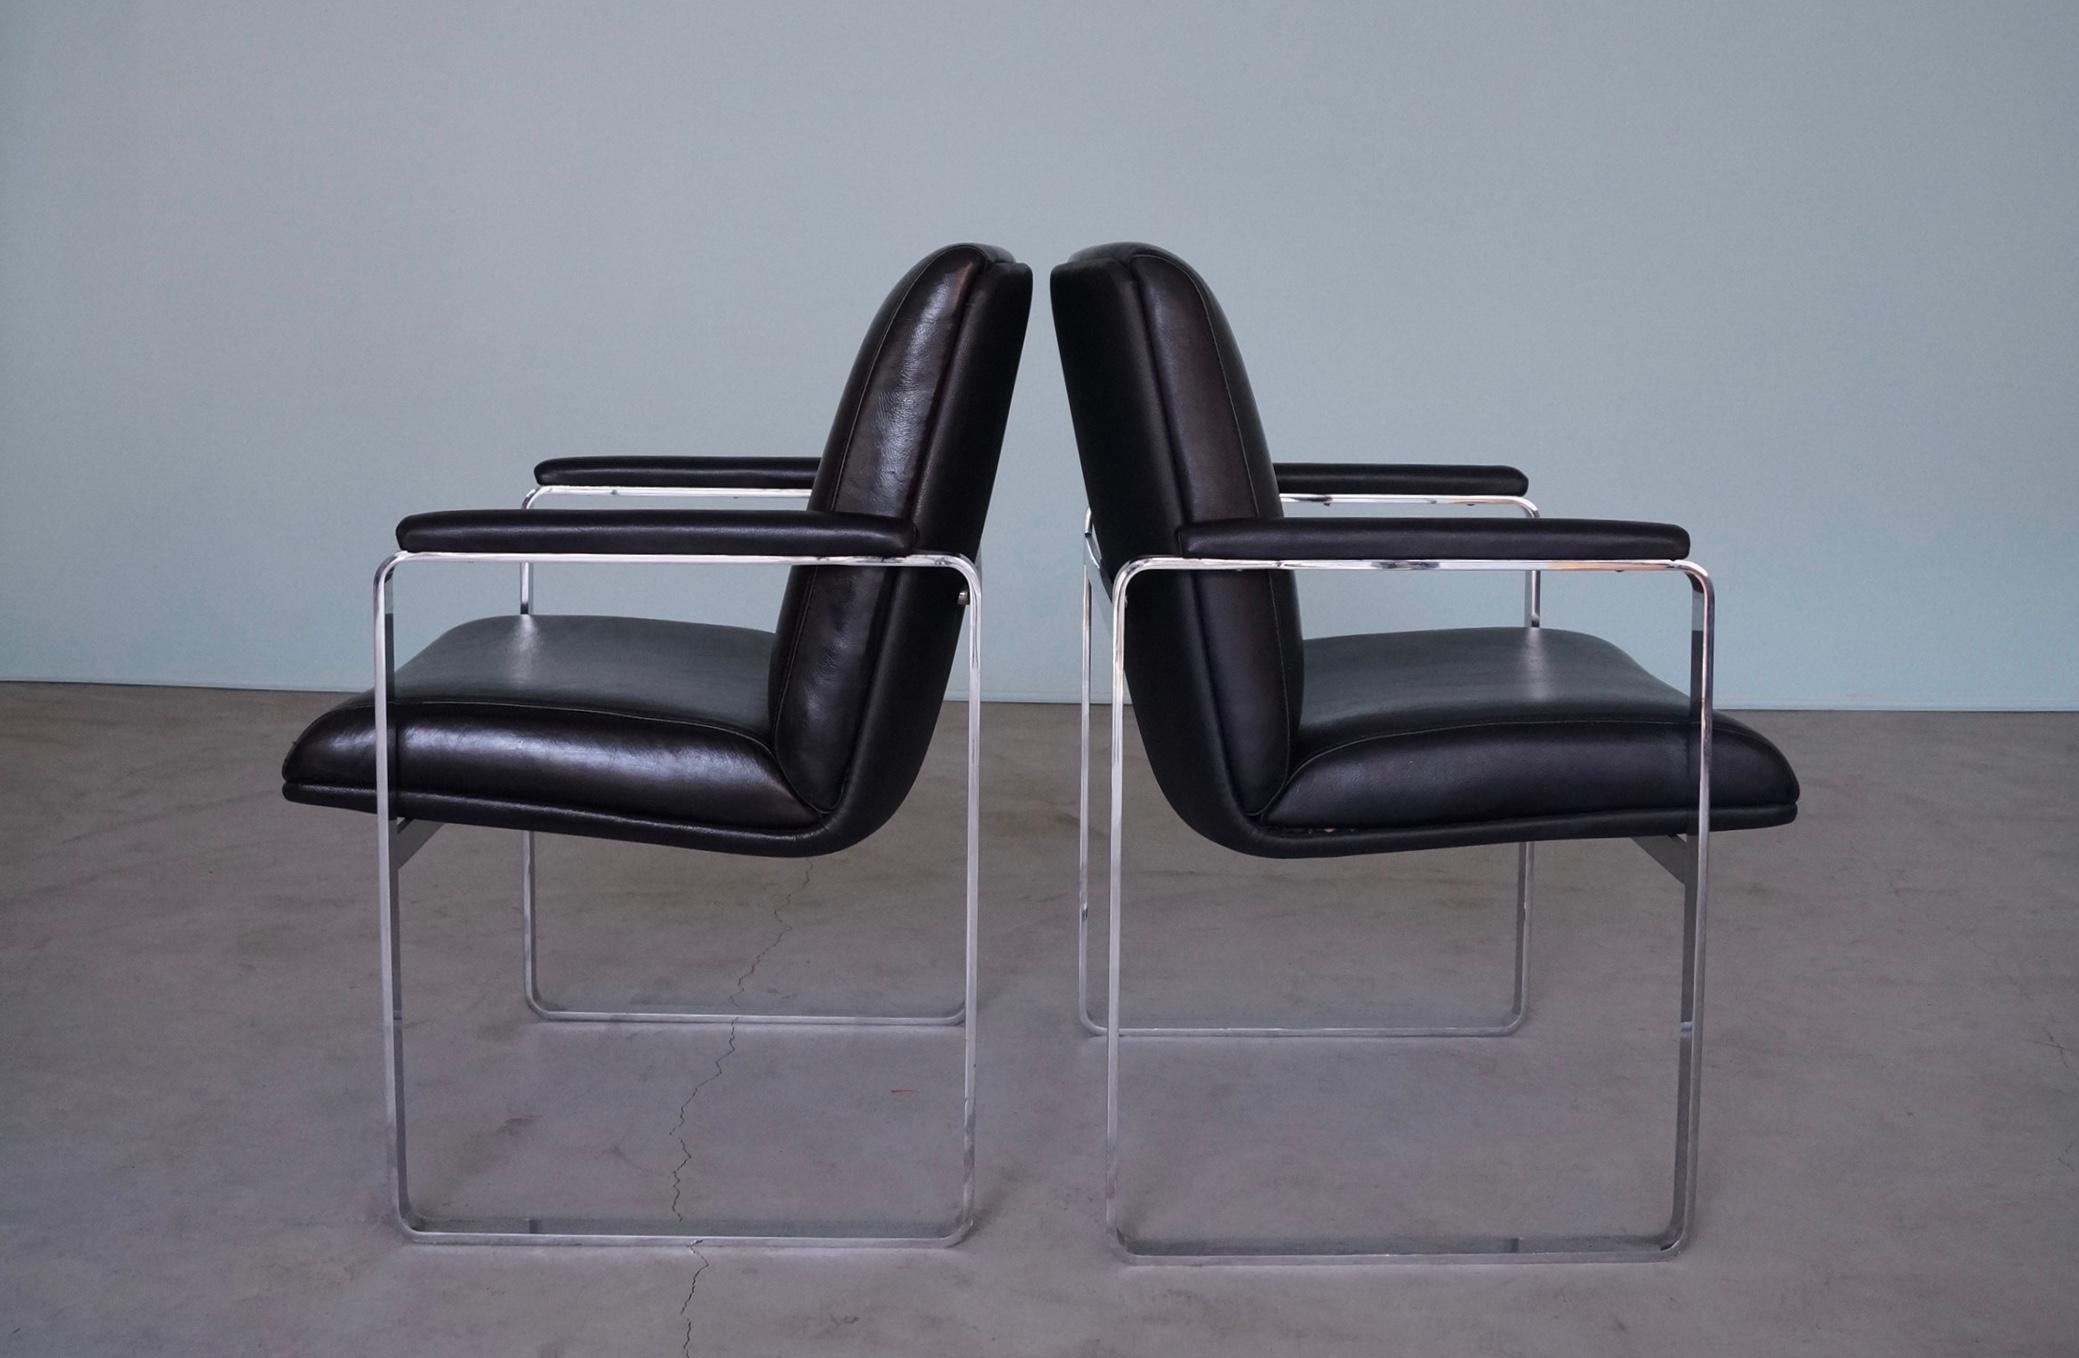 1960's Mid-Century Modern Flat Bar Chrome & Black Leather Armchairs - a Pair For Sale 1